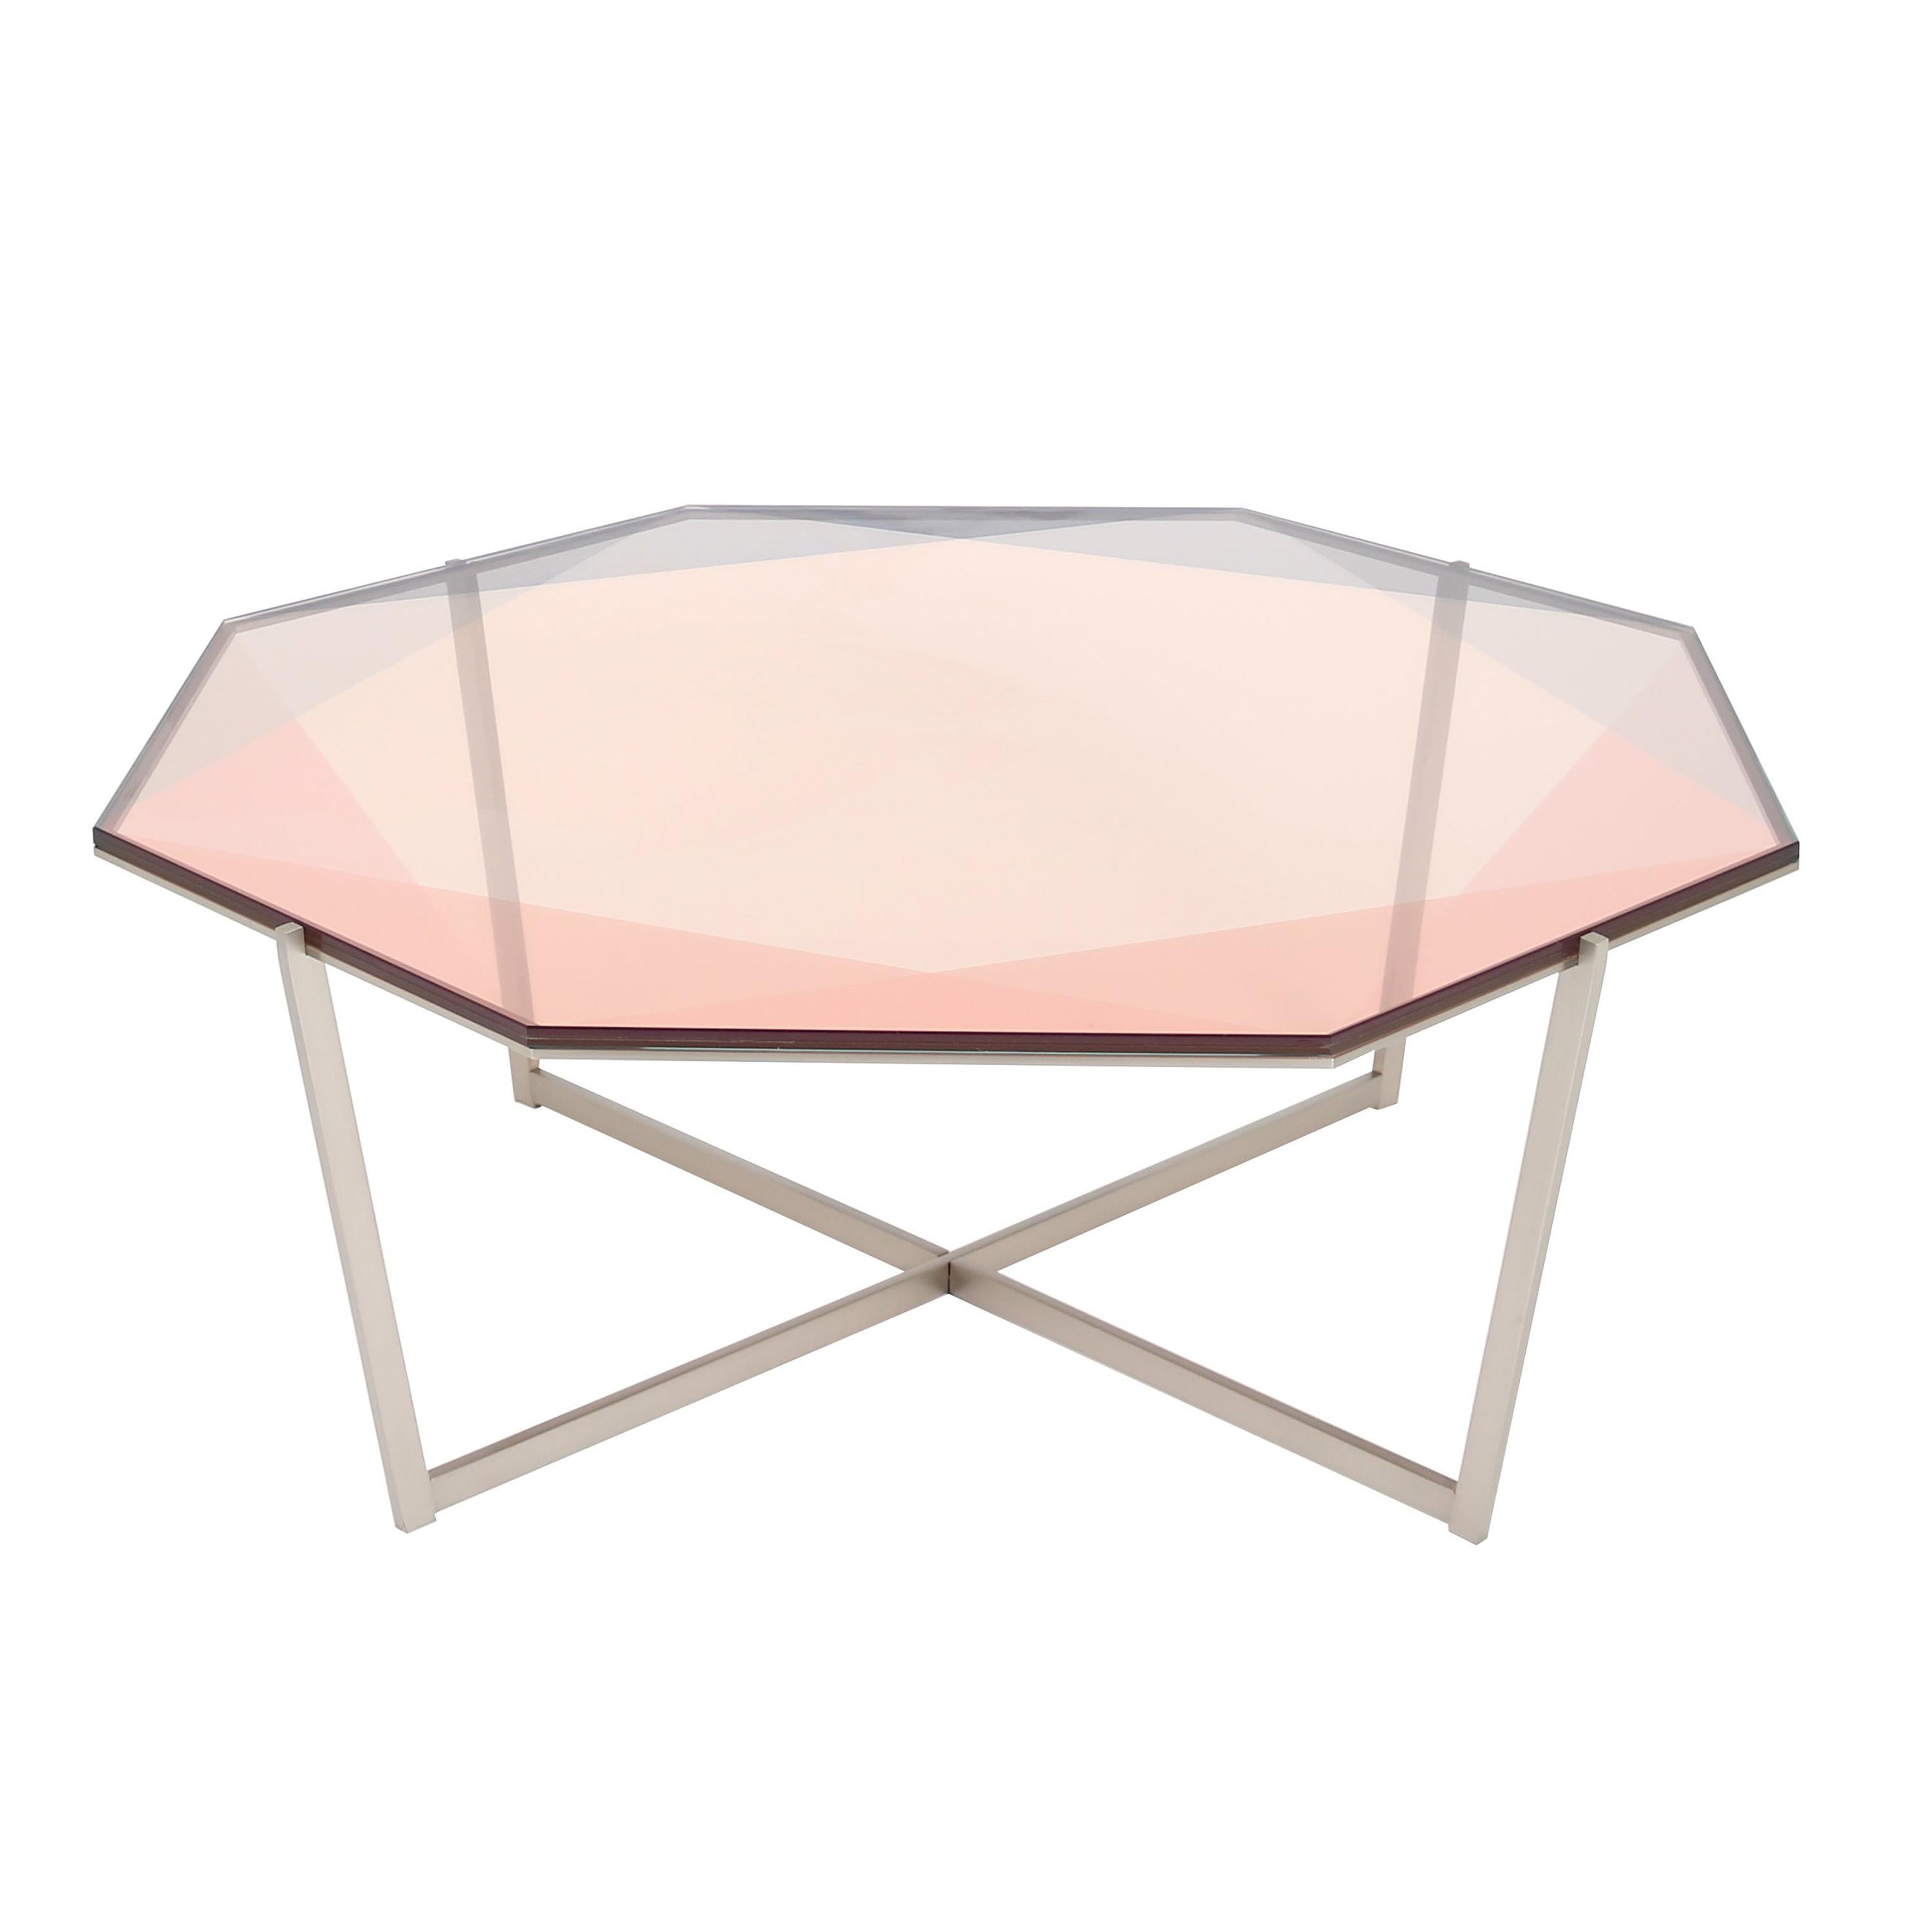 Table basse octogonale Gem - Verre rose avec base en acier inoxydable par Debra Folz